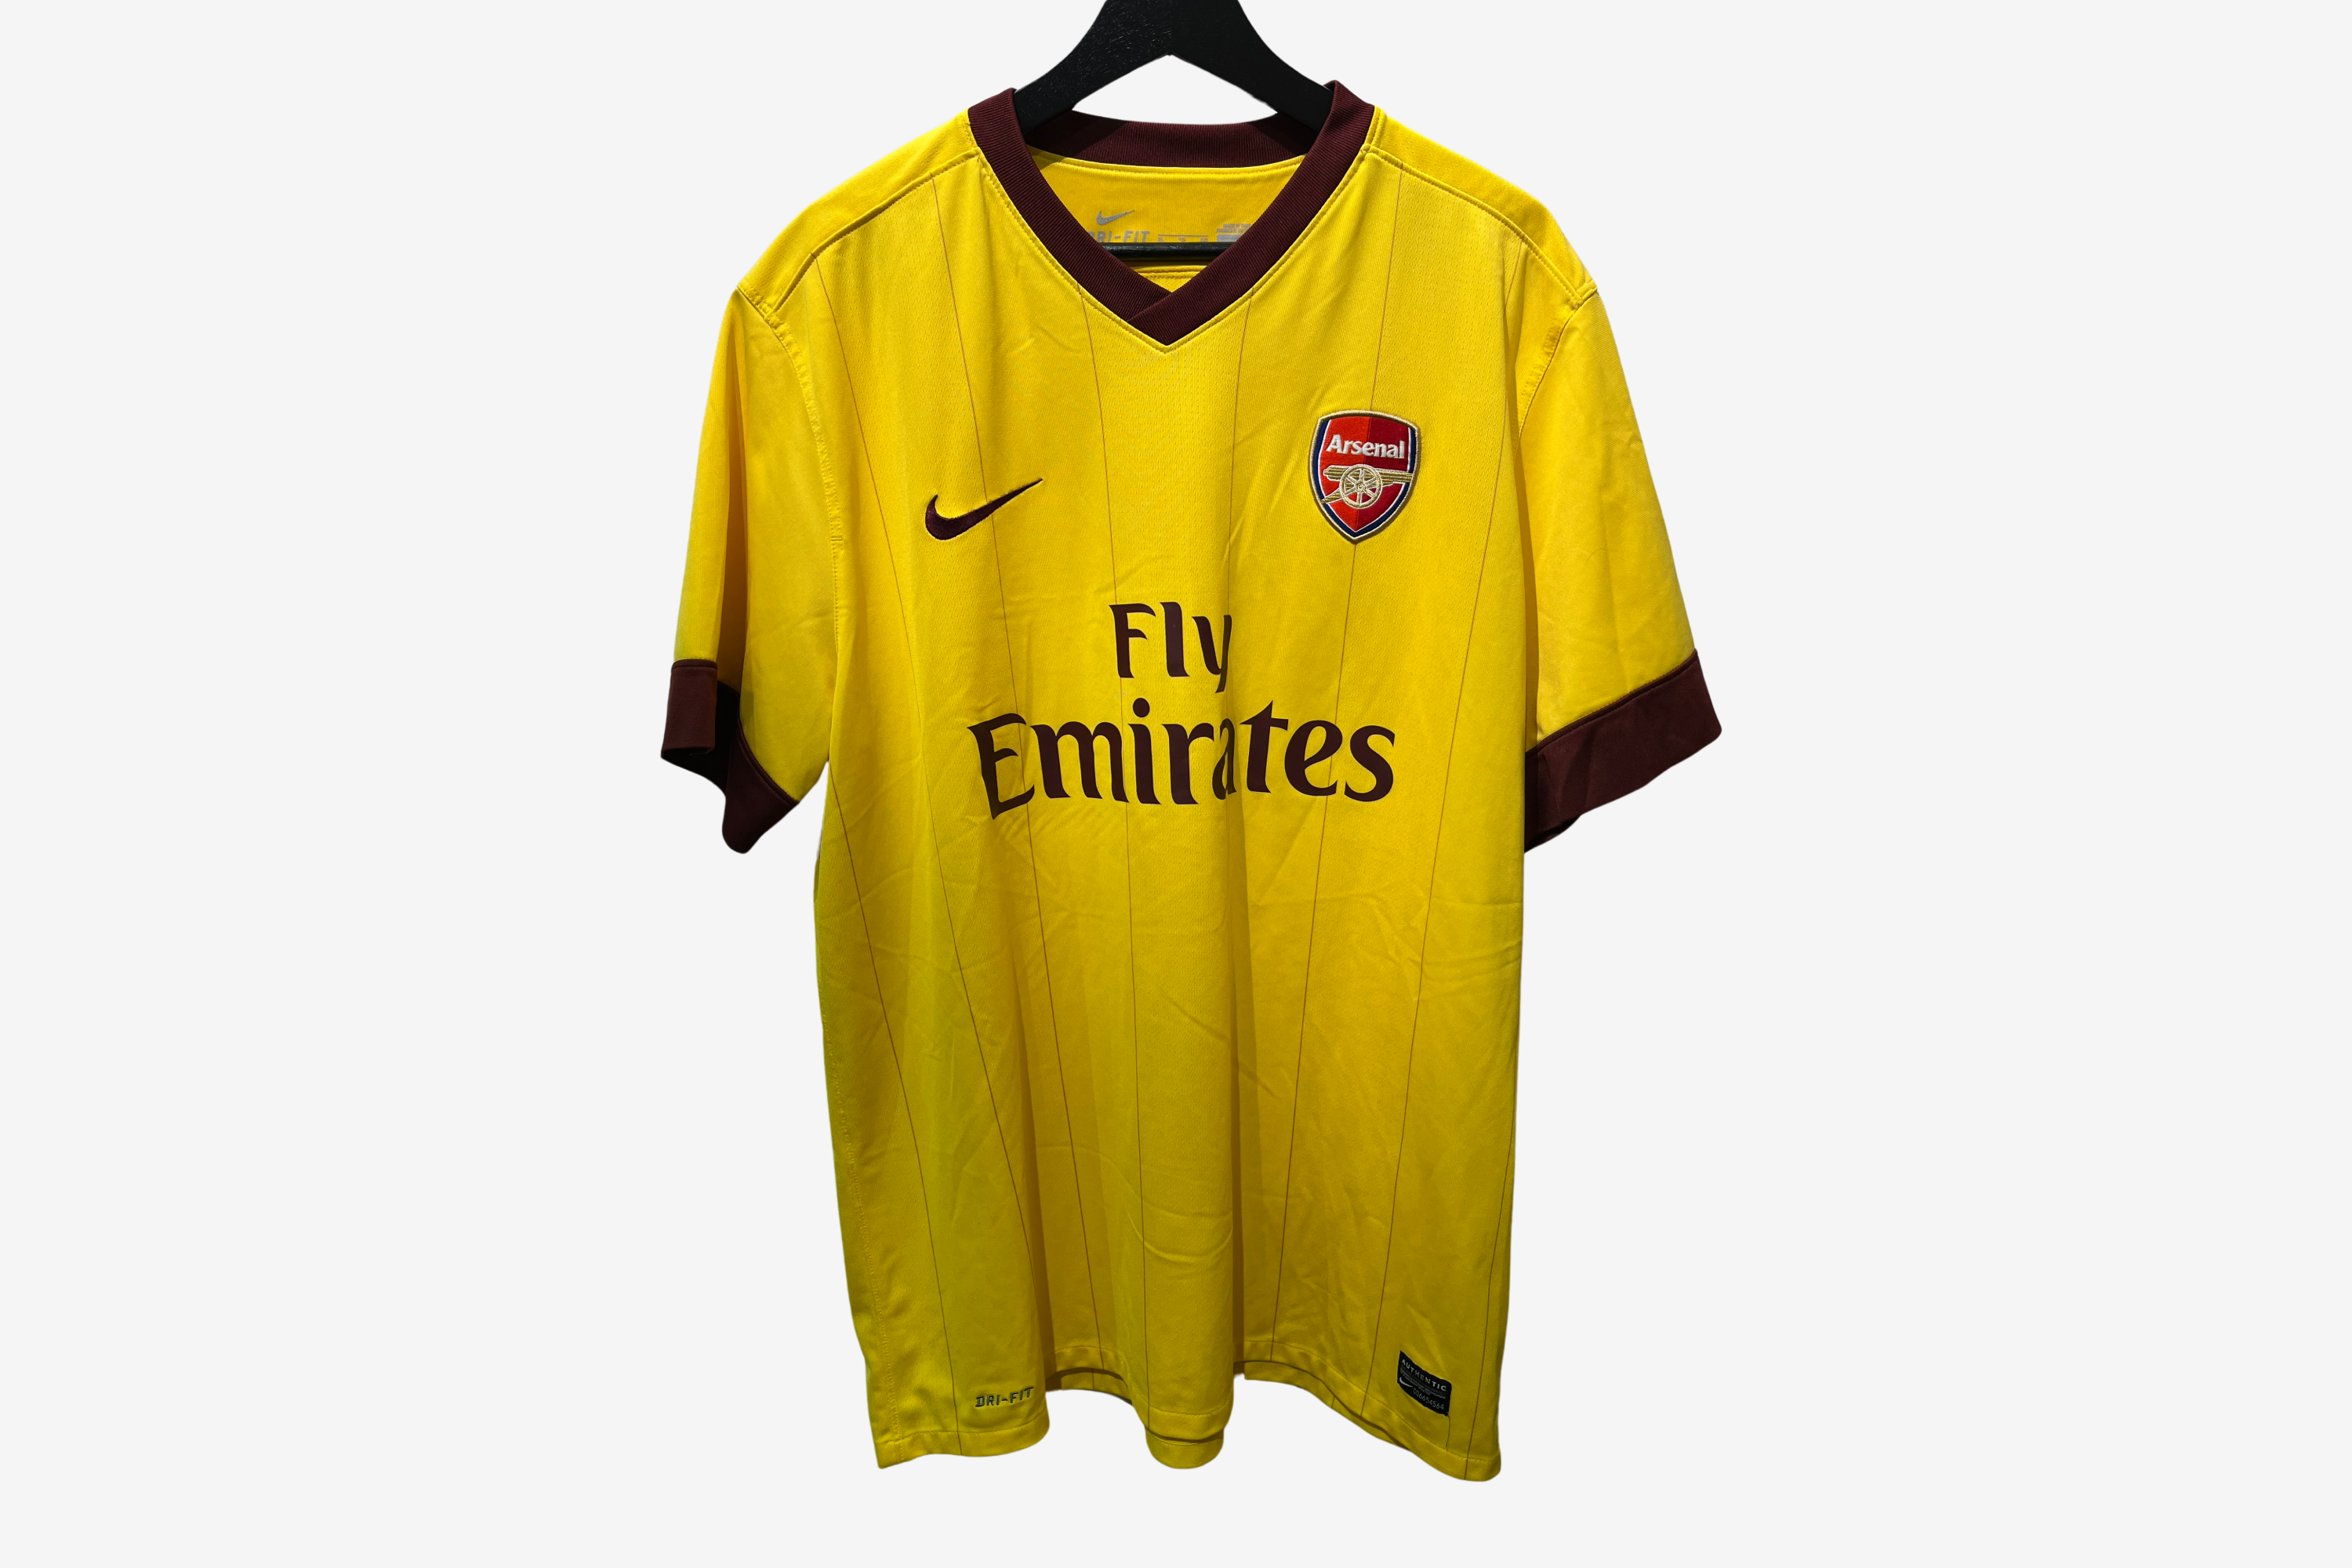 Nike - Arsenal 2010/11 Away Football Shirt